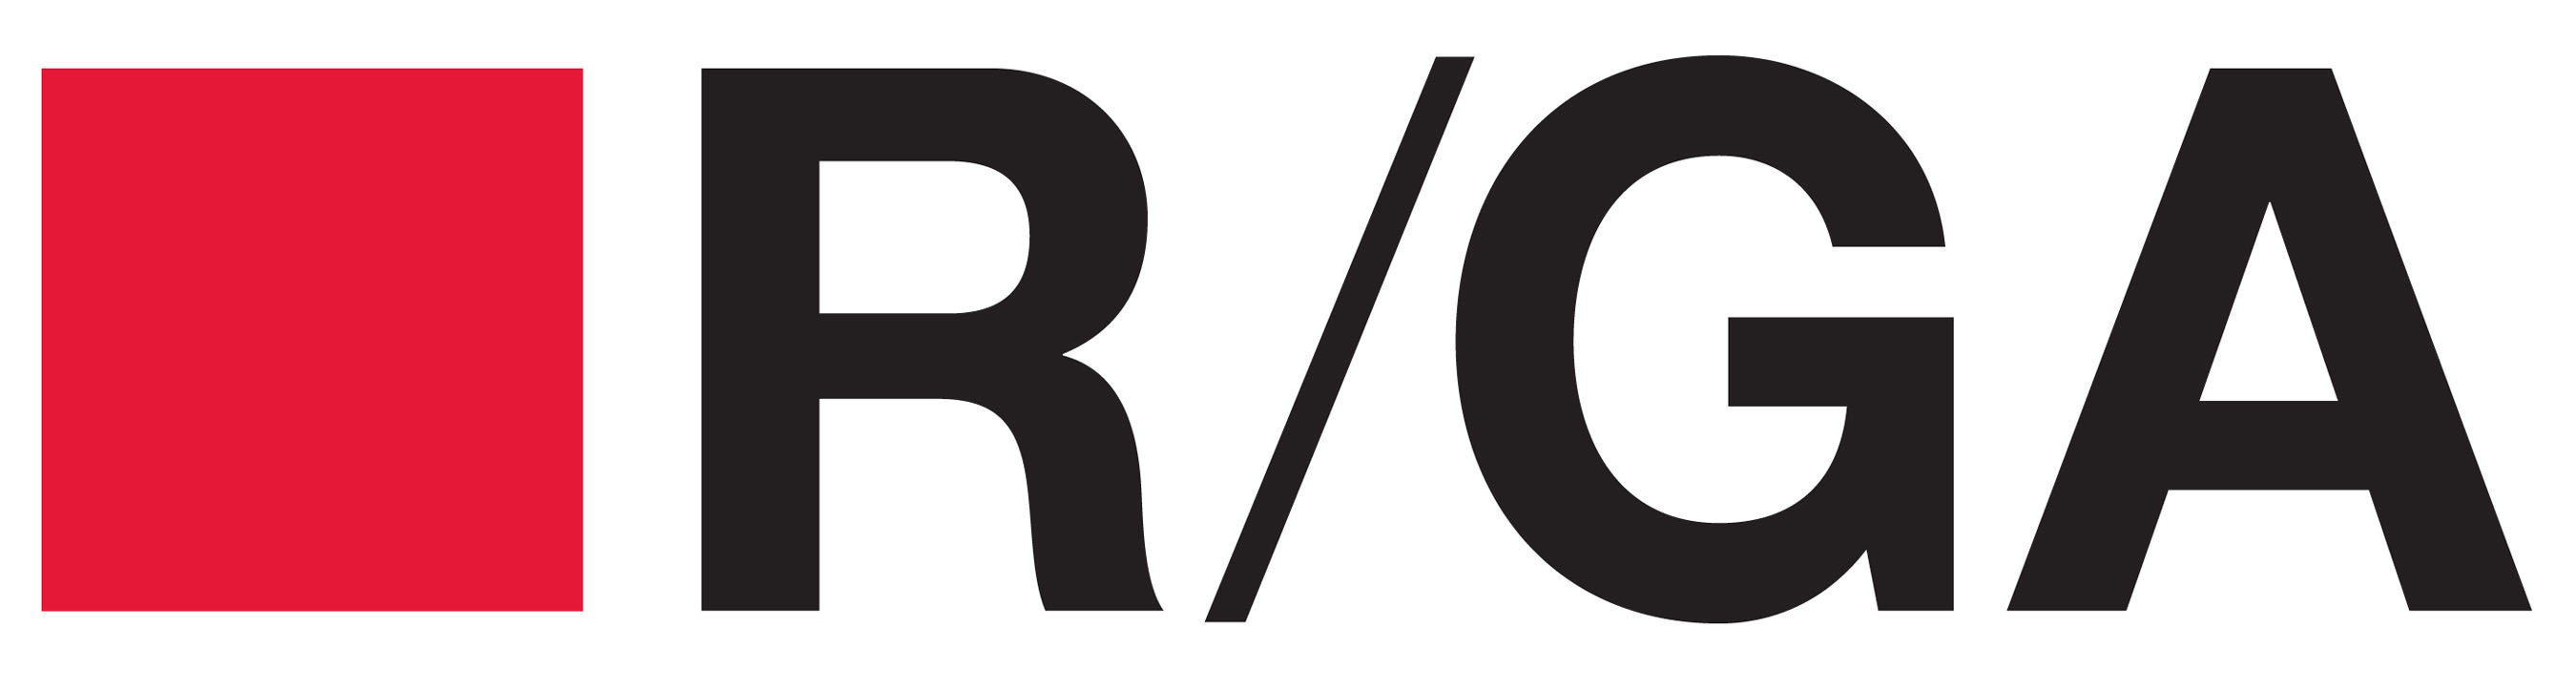 R/GA logo. (PRNewsFoto/NEWSCOM) (PRNewsFoto/)